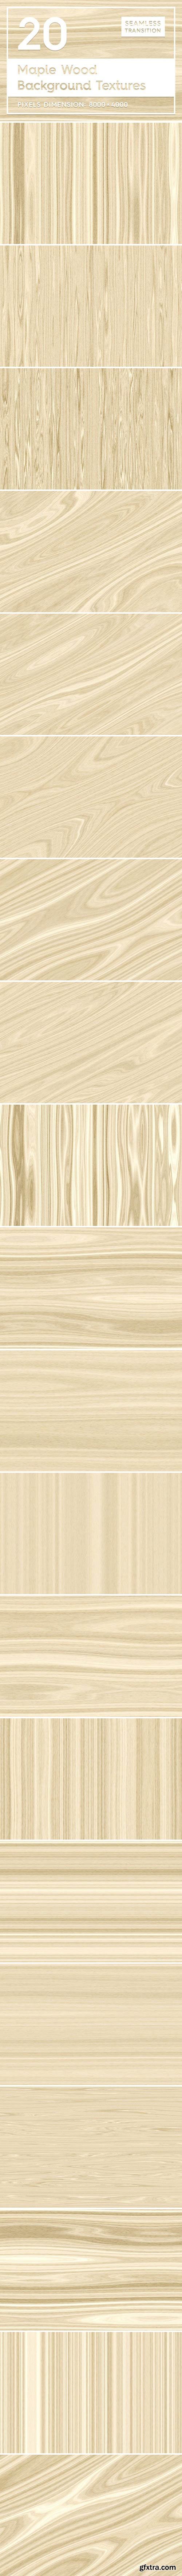 CM - 20 Maple Wood Background Textures 2167079